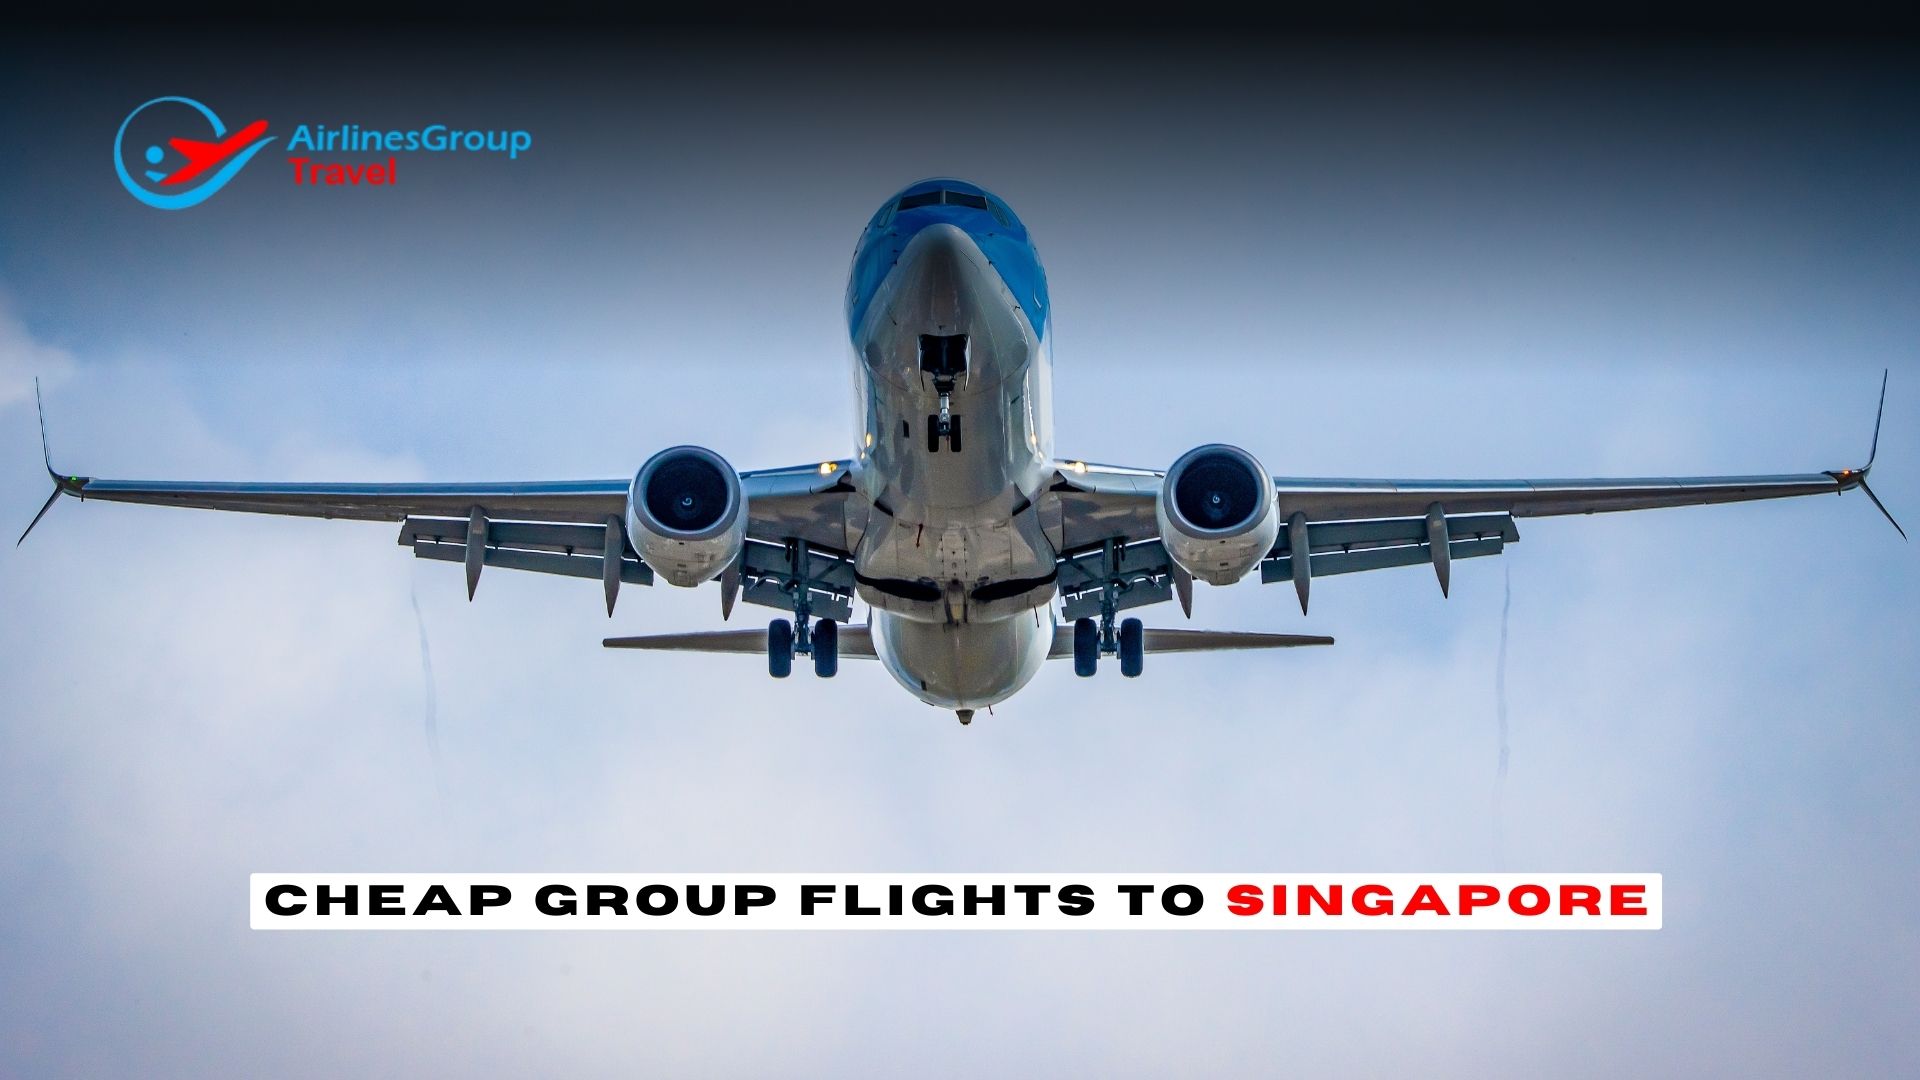 Group Flights to Singapore